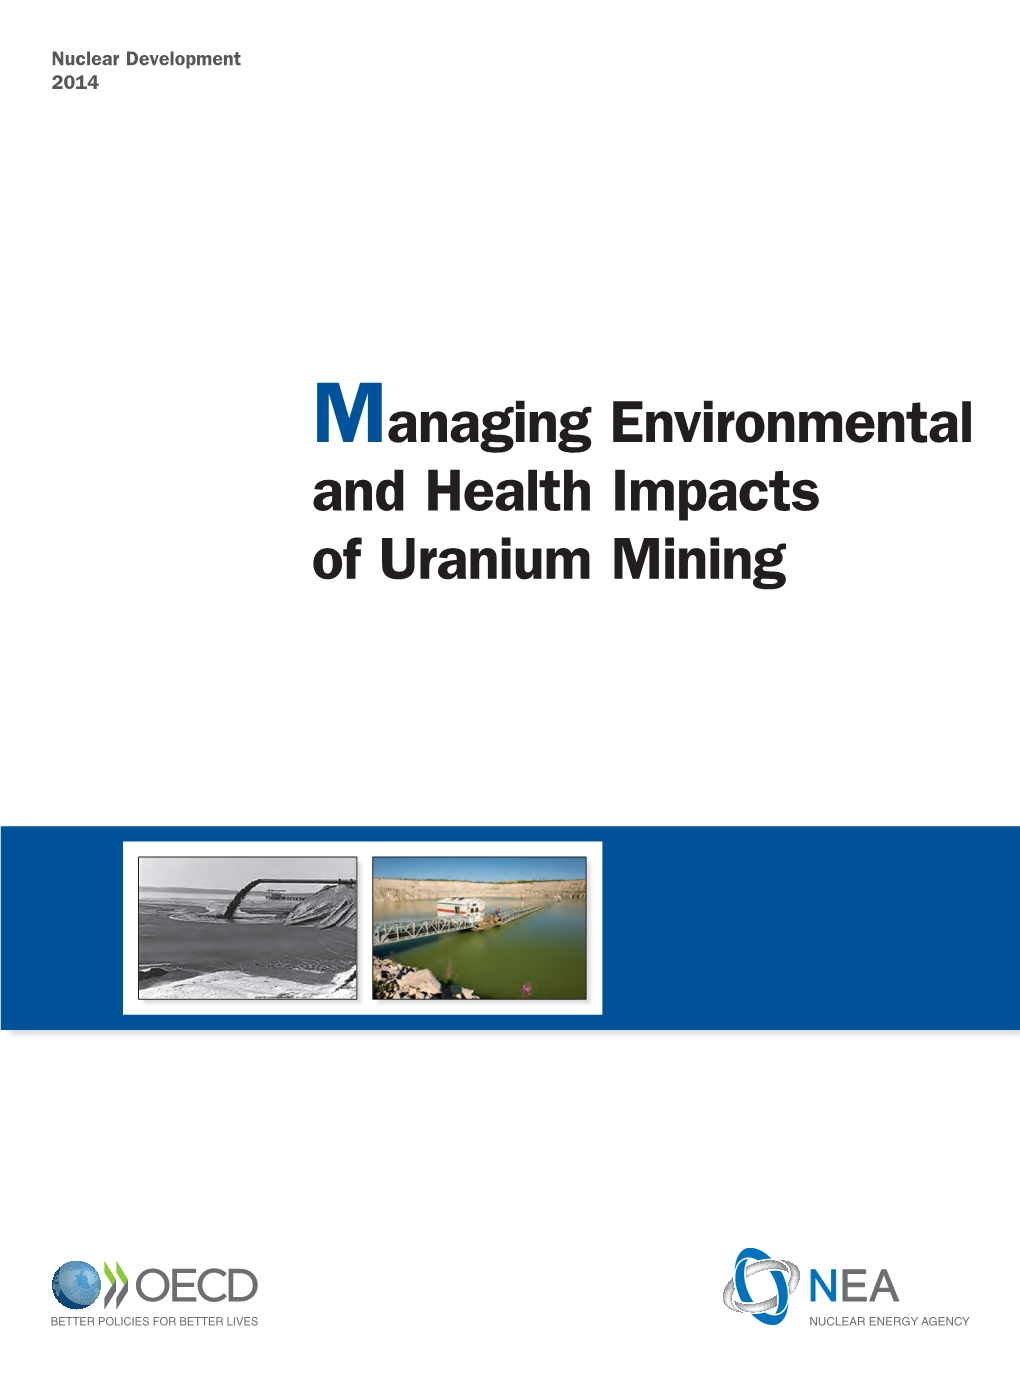 Managing Environmental and Health Impacts of Uranium Mining